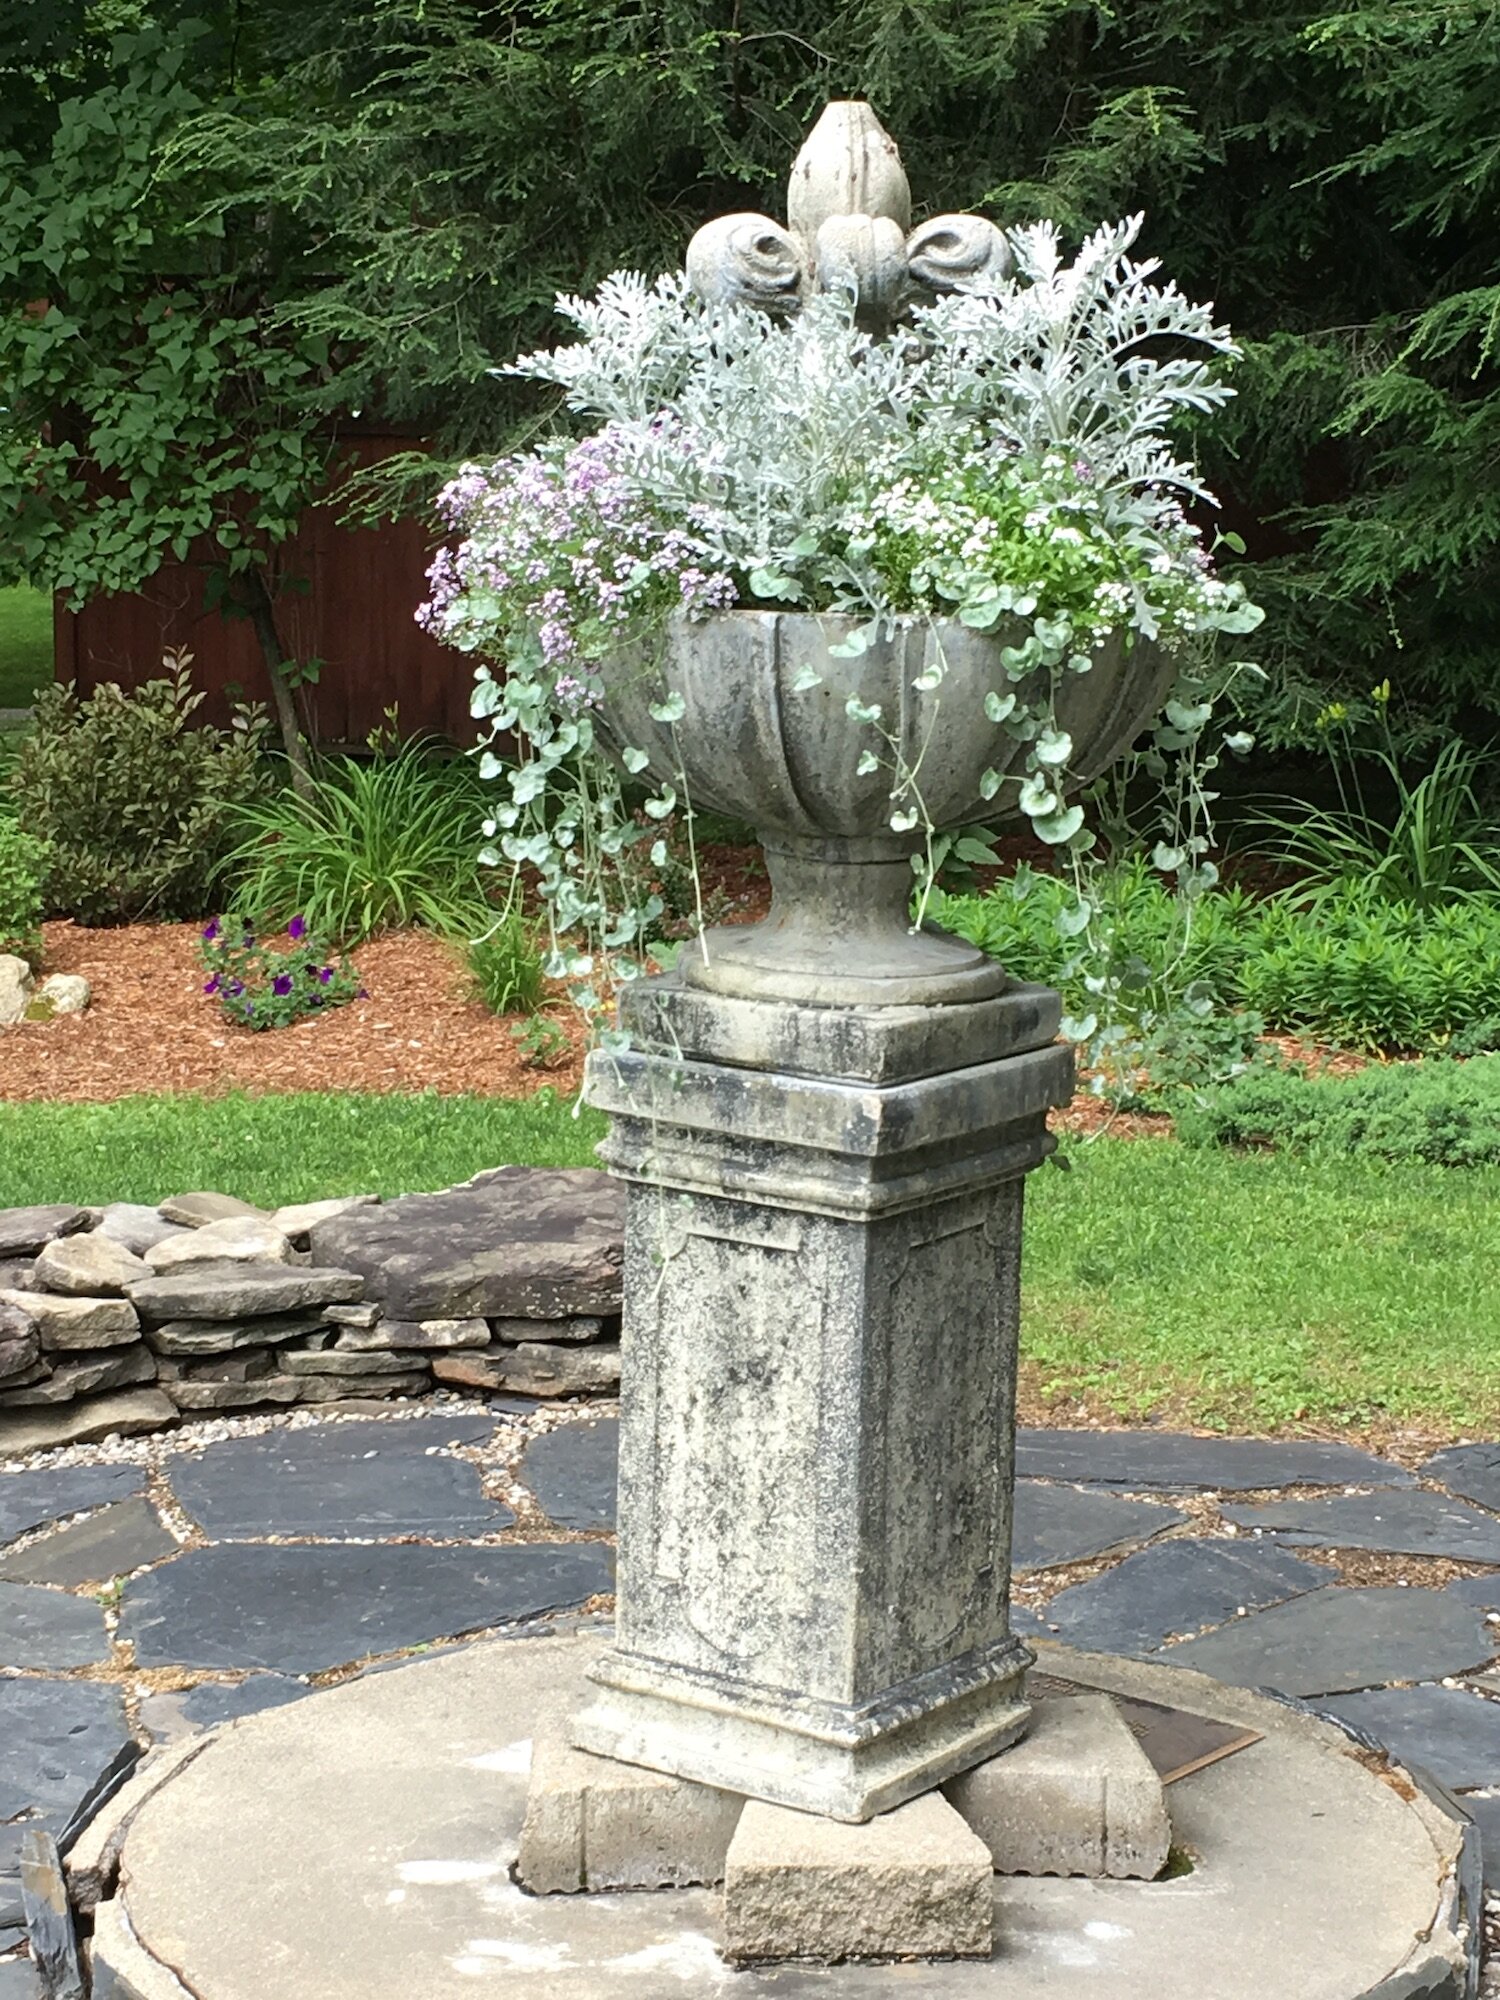 garden pedesal with urn of flowers.jpg